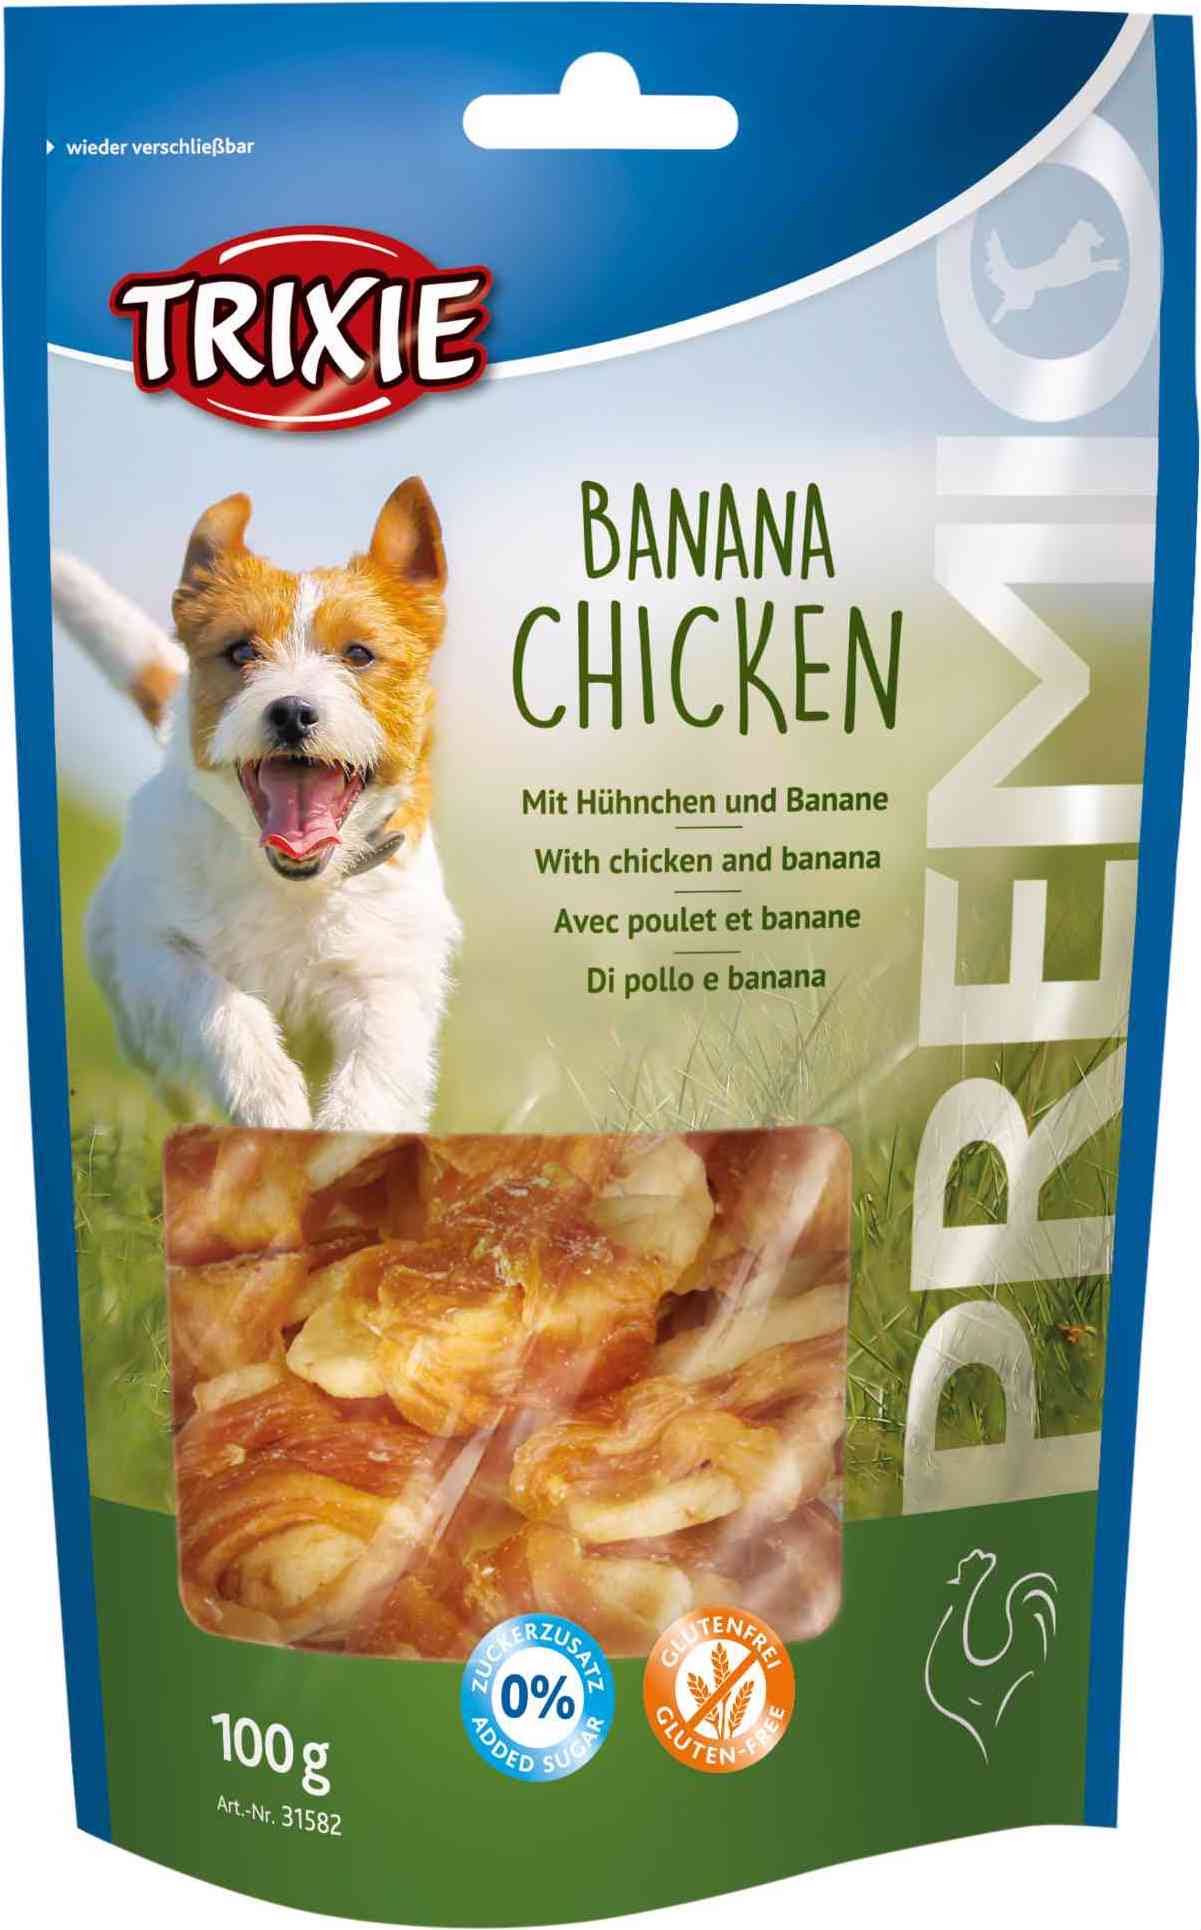 Trixie Premio Dog Treat - Banana Chicken, 100g